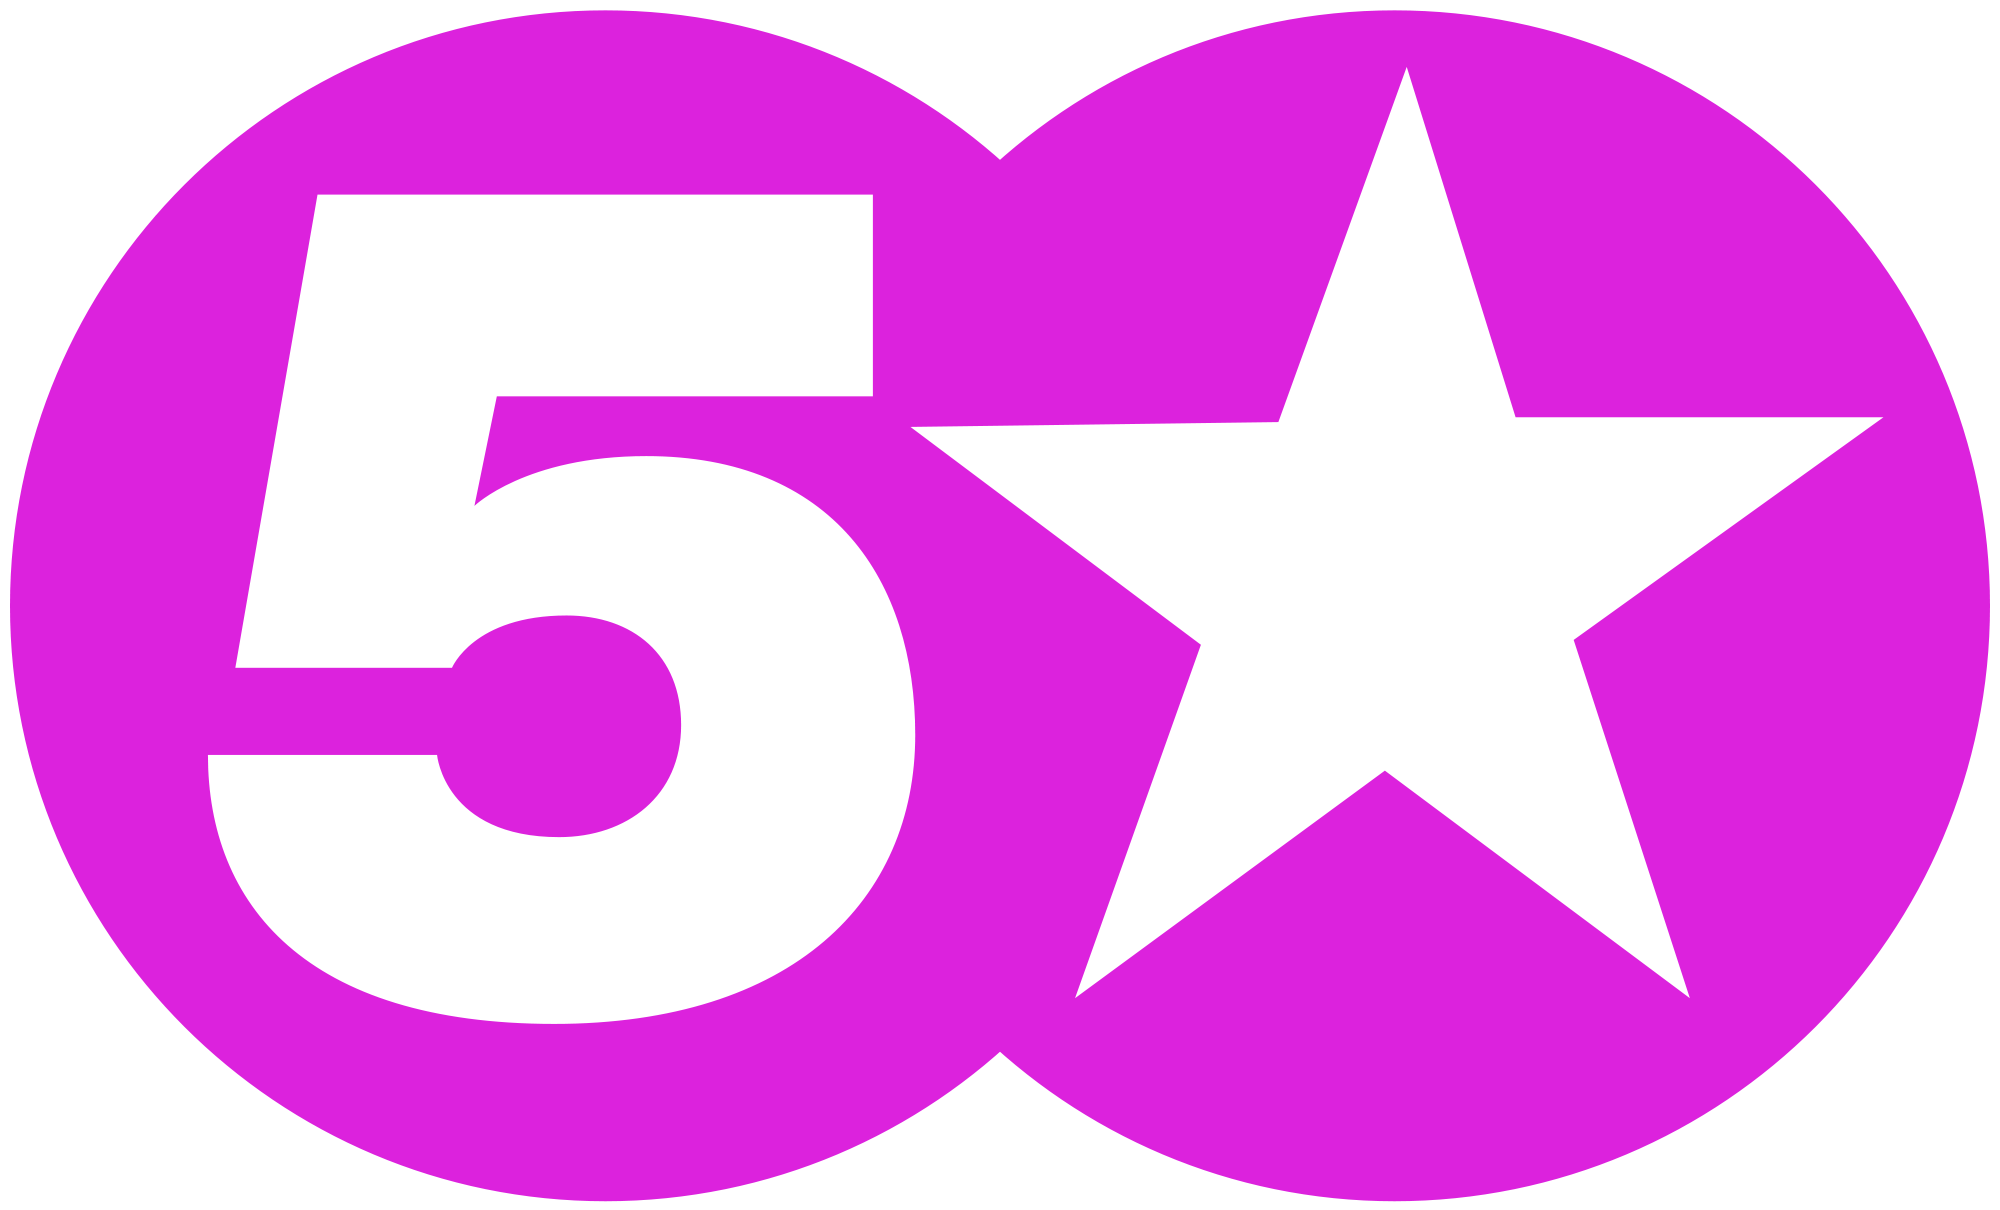 5 stars ru. Логотип звезда. 5 Звезд логотип. 5 Звезд картинка. Значок канала Star TV.